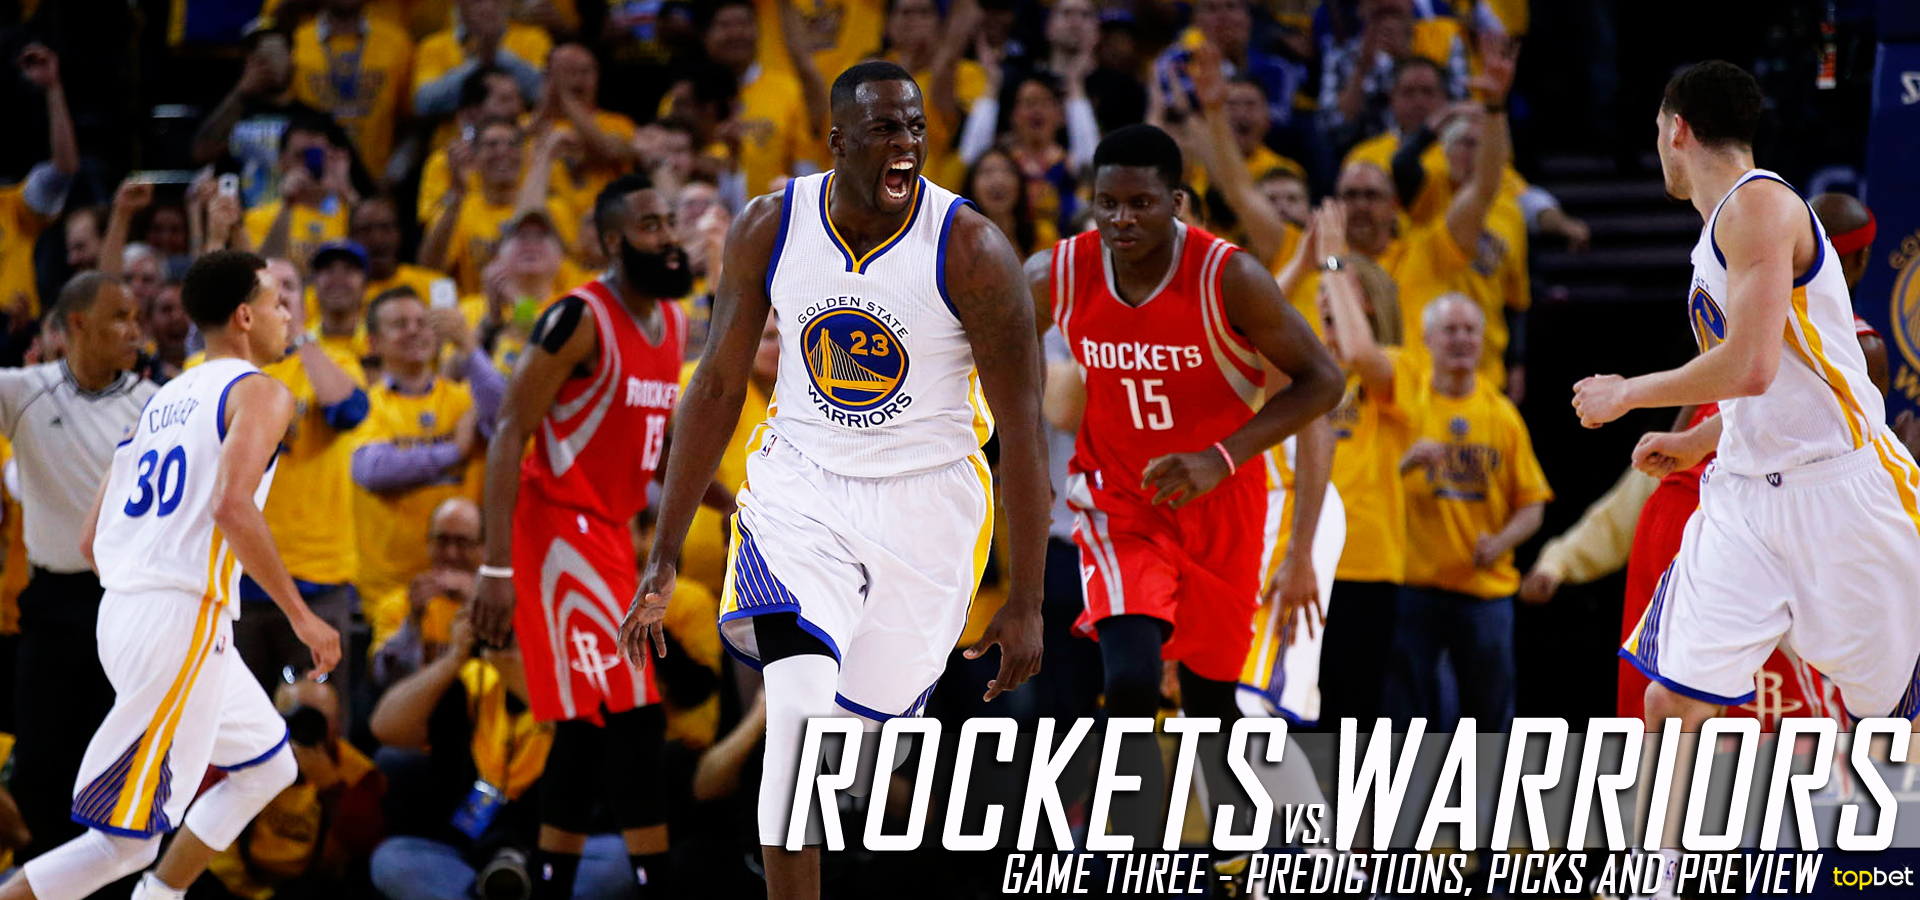 Rockets vs Warriors Series Game 3 Predictions, Picks, Odds